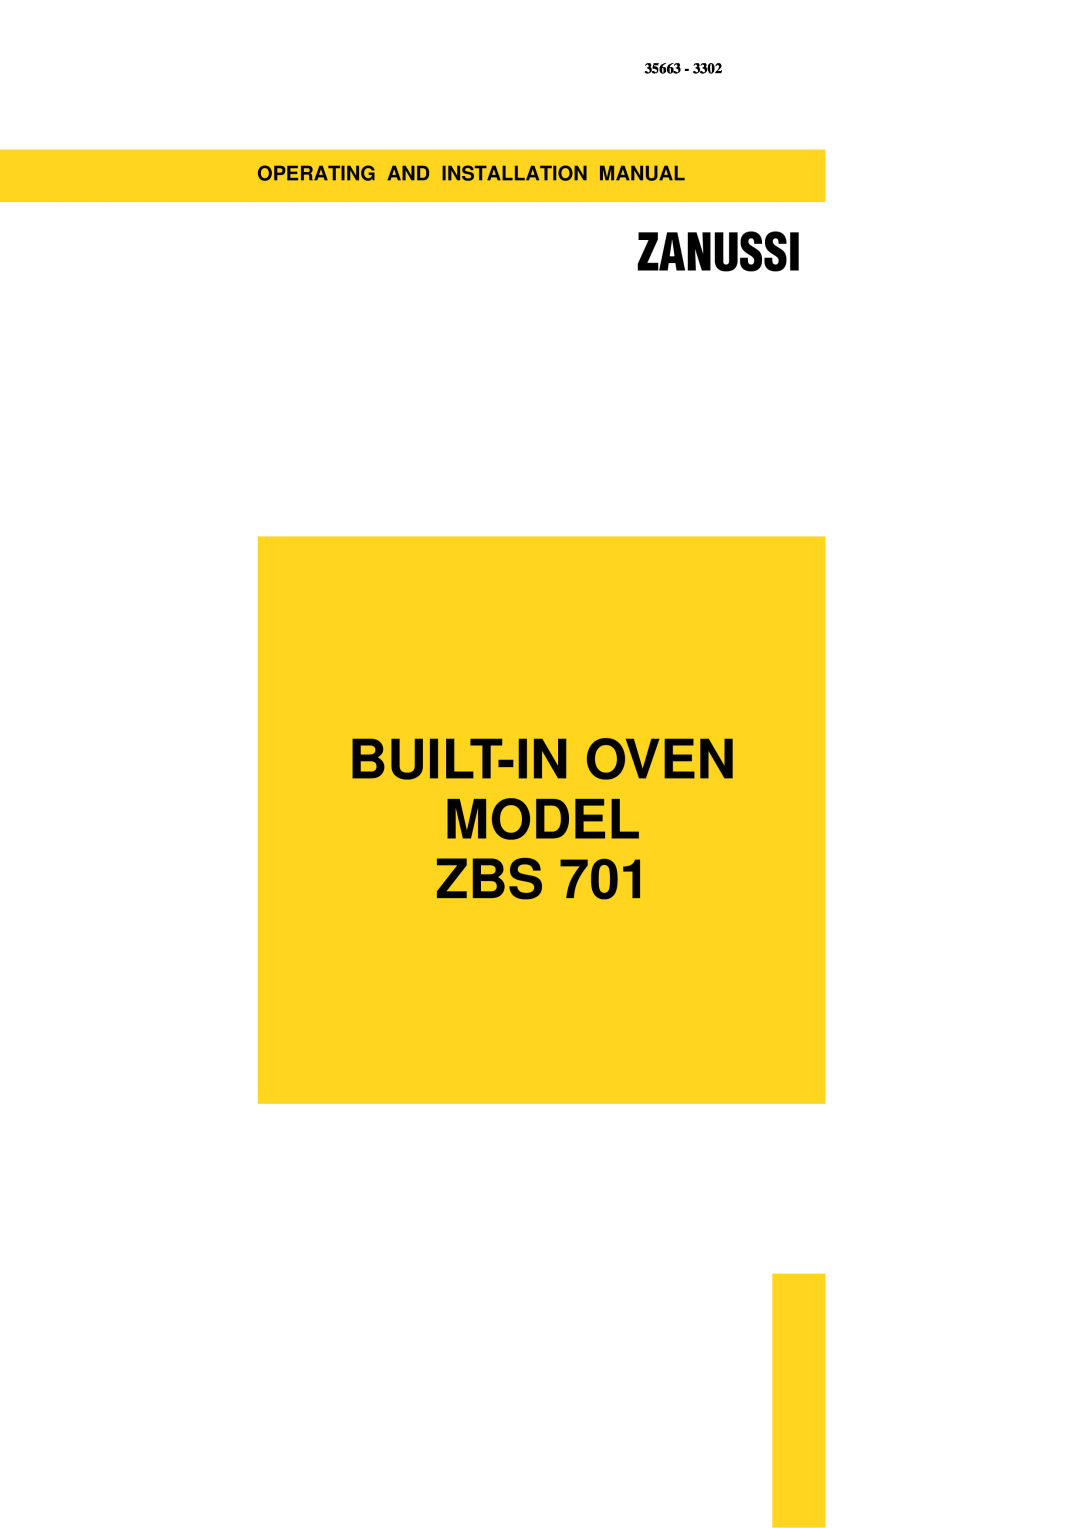 Zanussi ZBS 701 installation manual Built-Inoven Model Zbs, Zanussi, 35663 